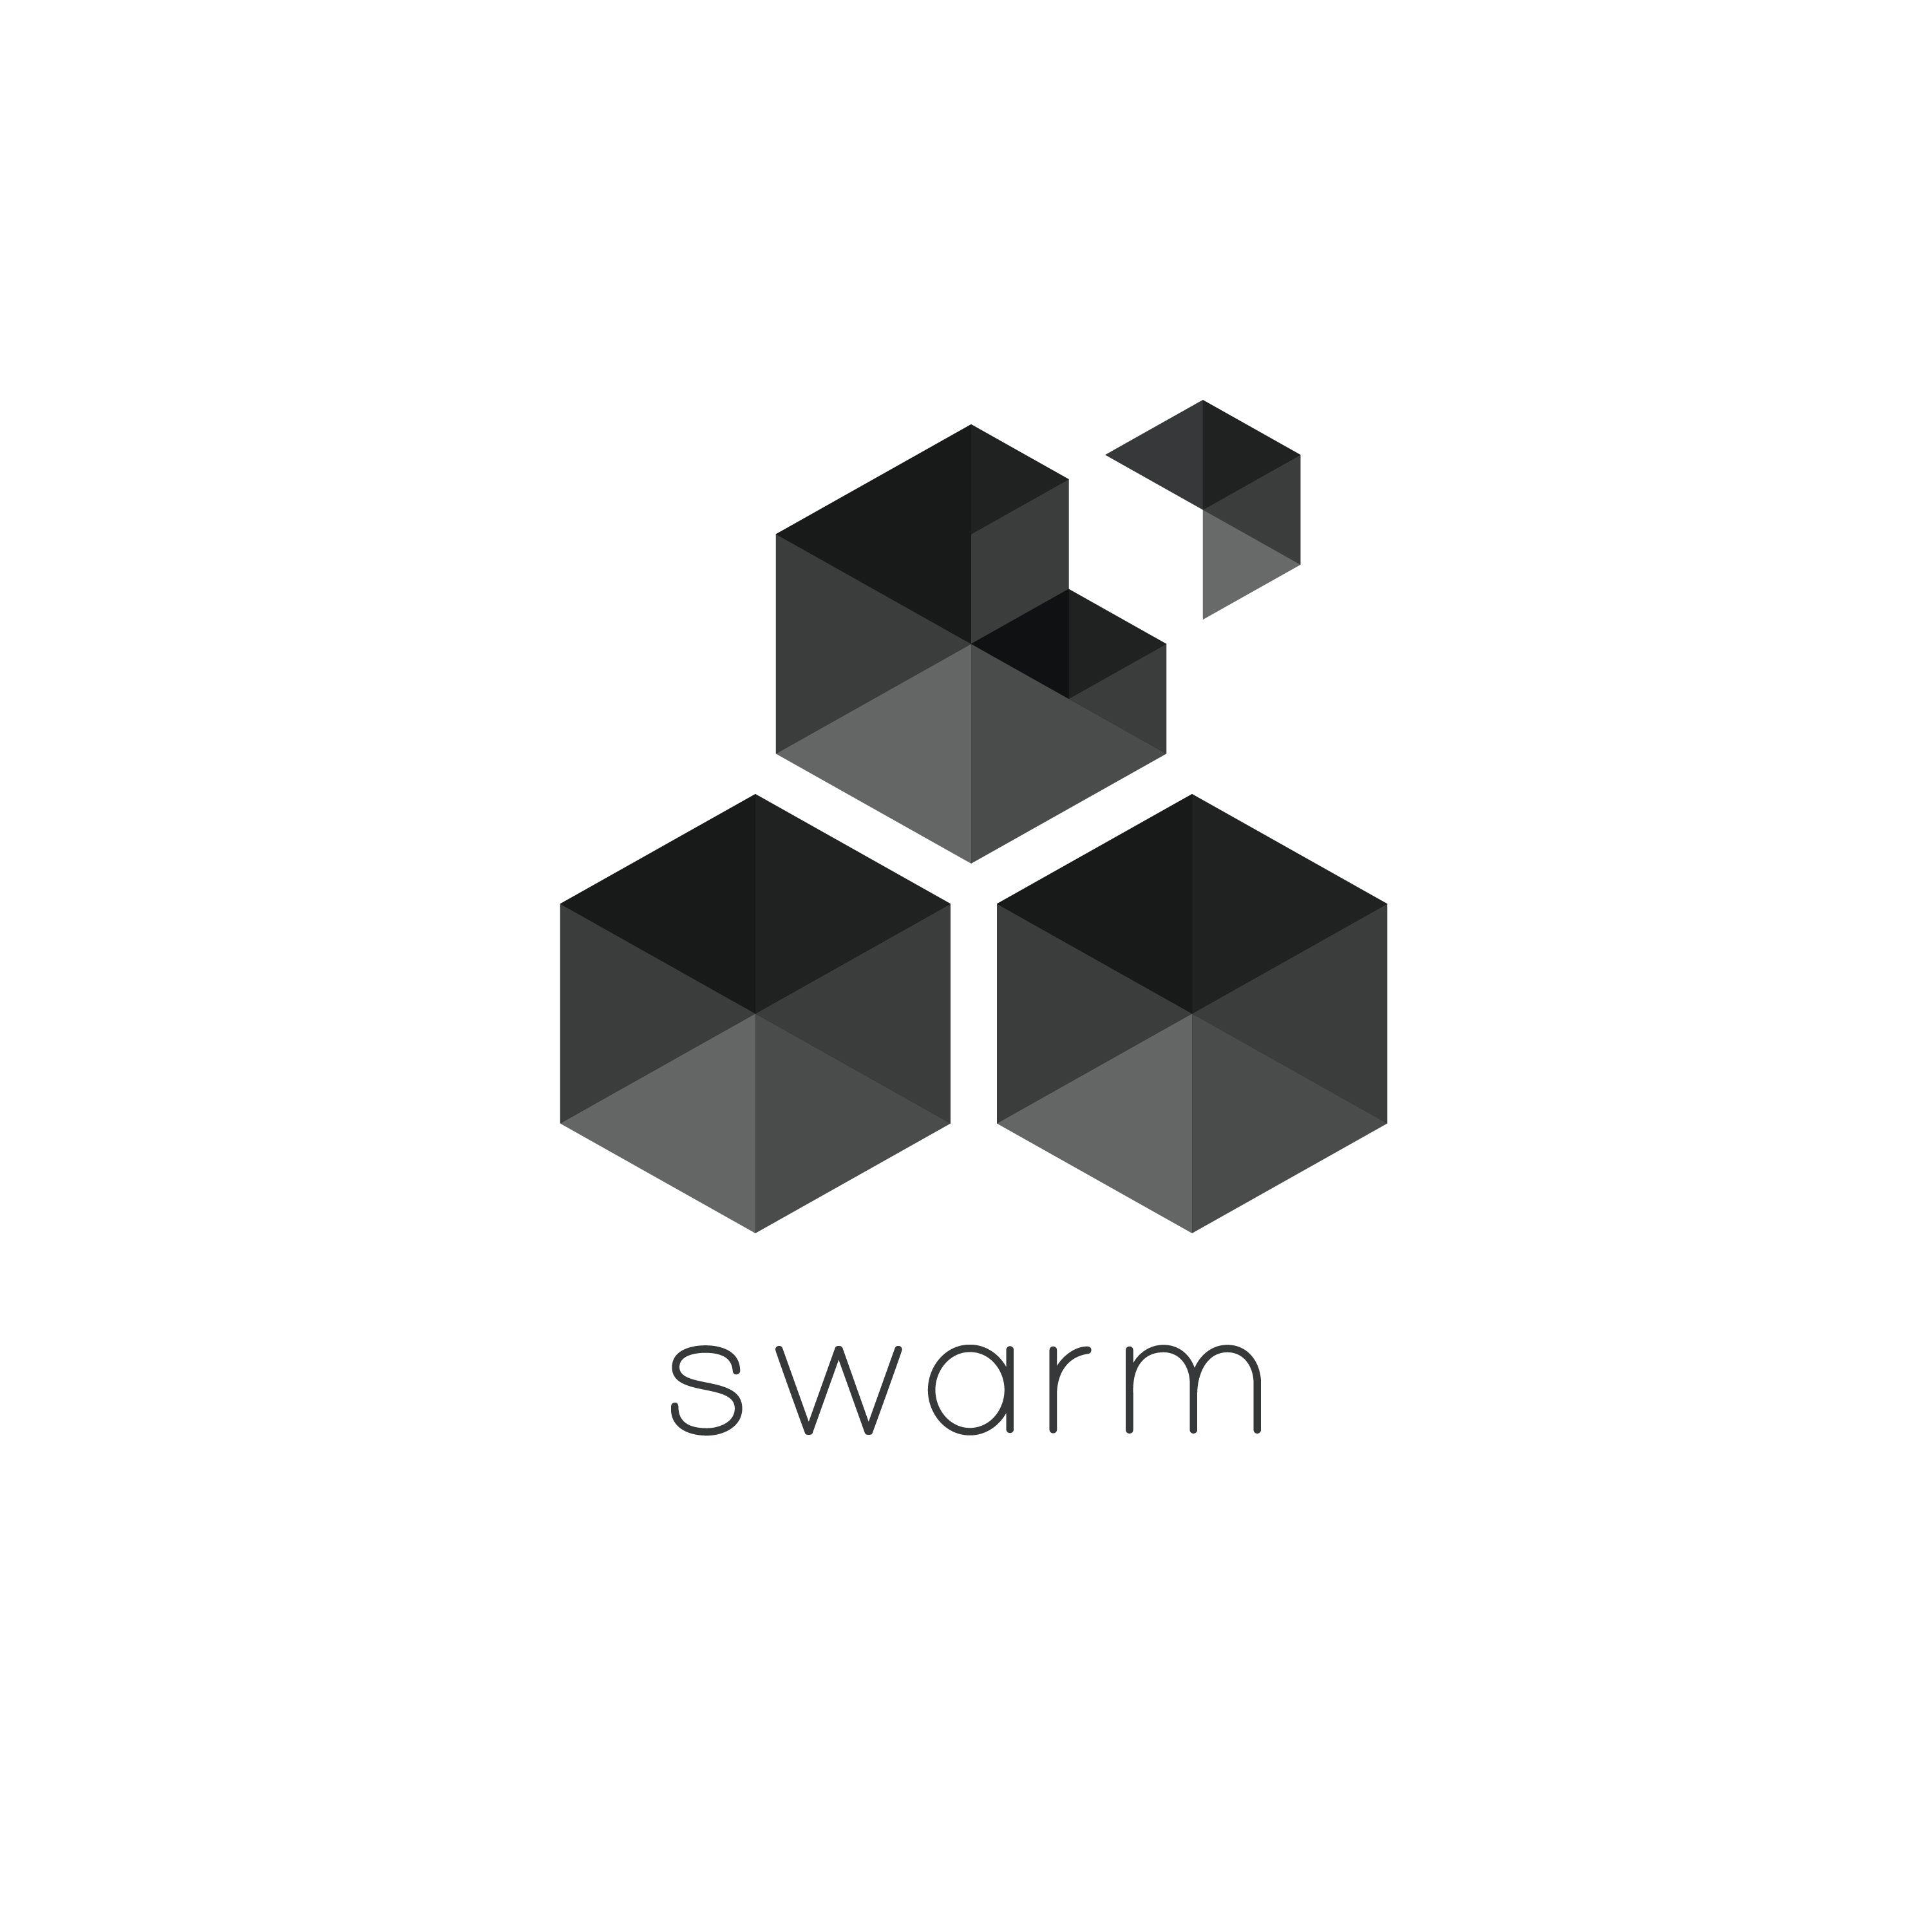 Swarm Logo - Introduction